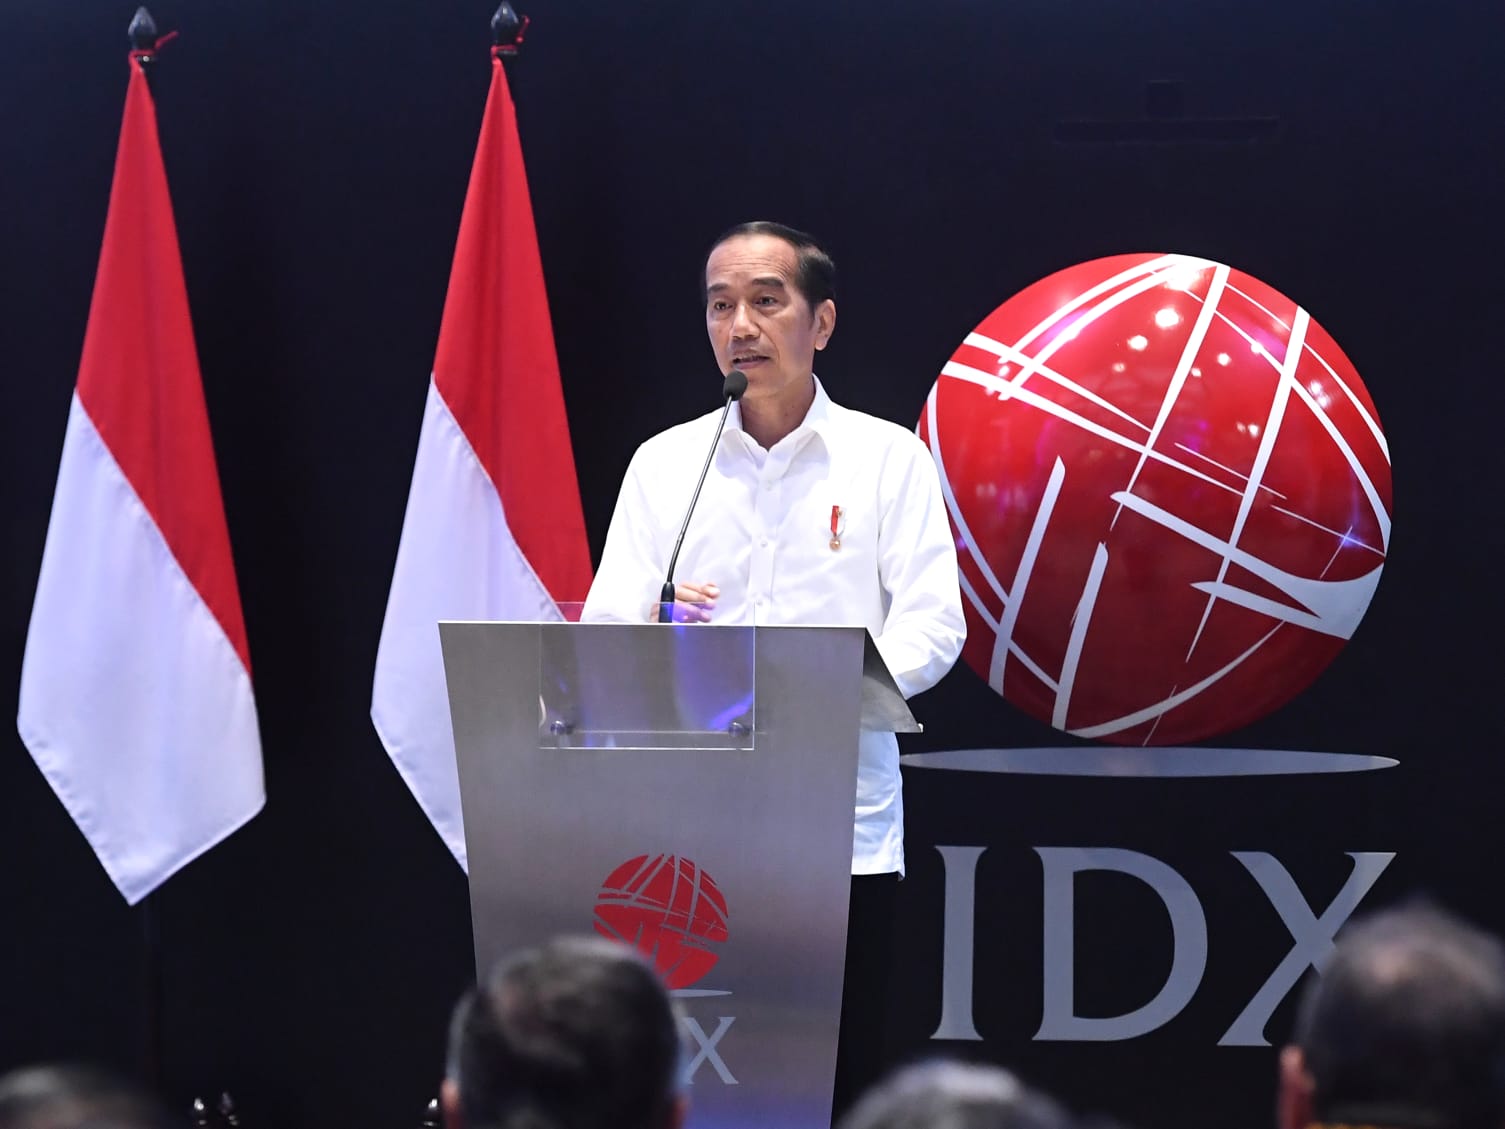 Presiden Joko Widodo membuka Perdagangan Bursa Efek Indonesia Tahun 2023, di Gedung BEI, Jakarta, Senin (2/1/2023). Foto: dok/Menpan.go.id)